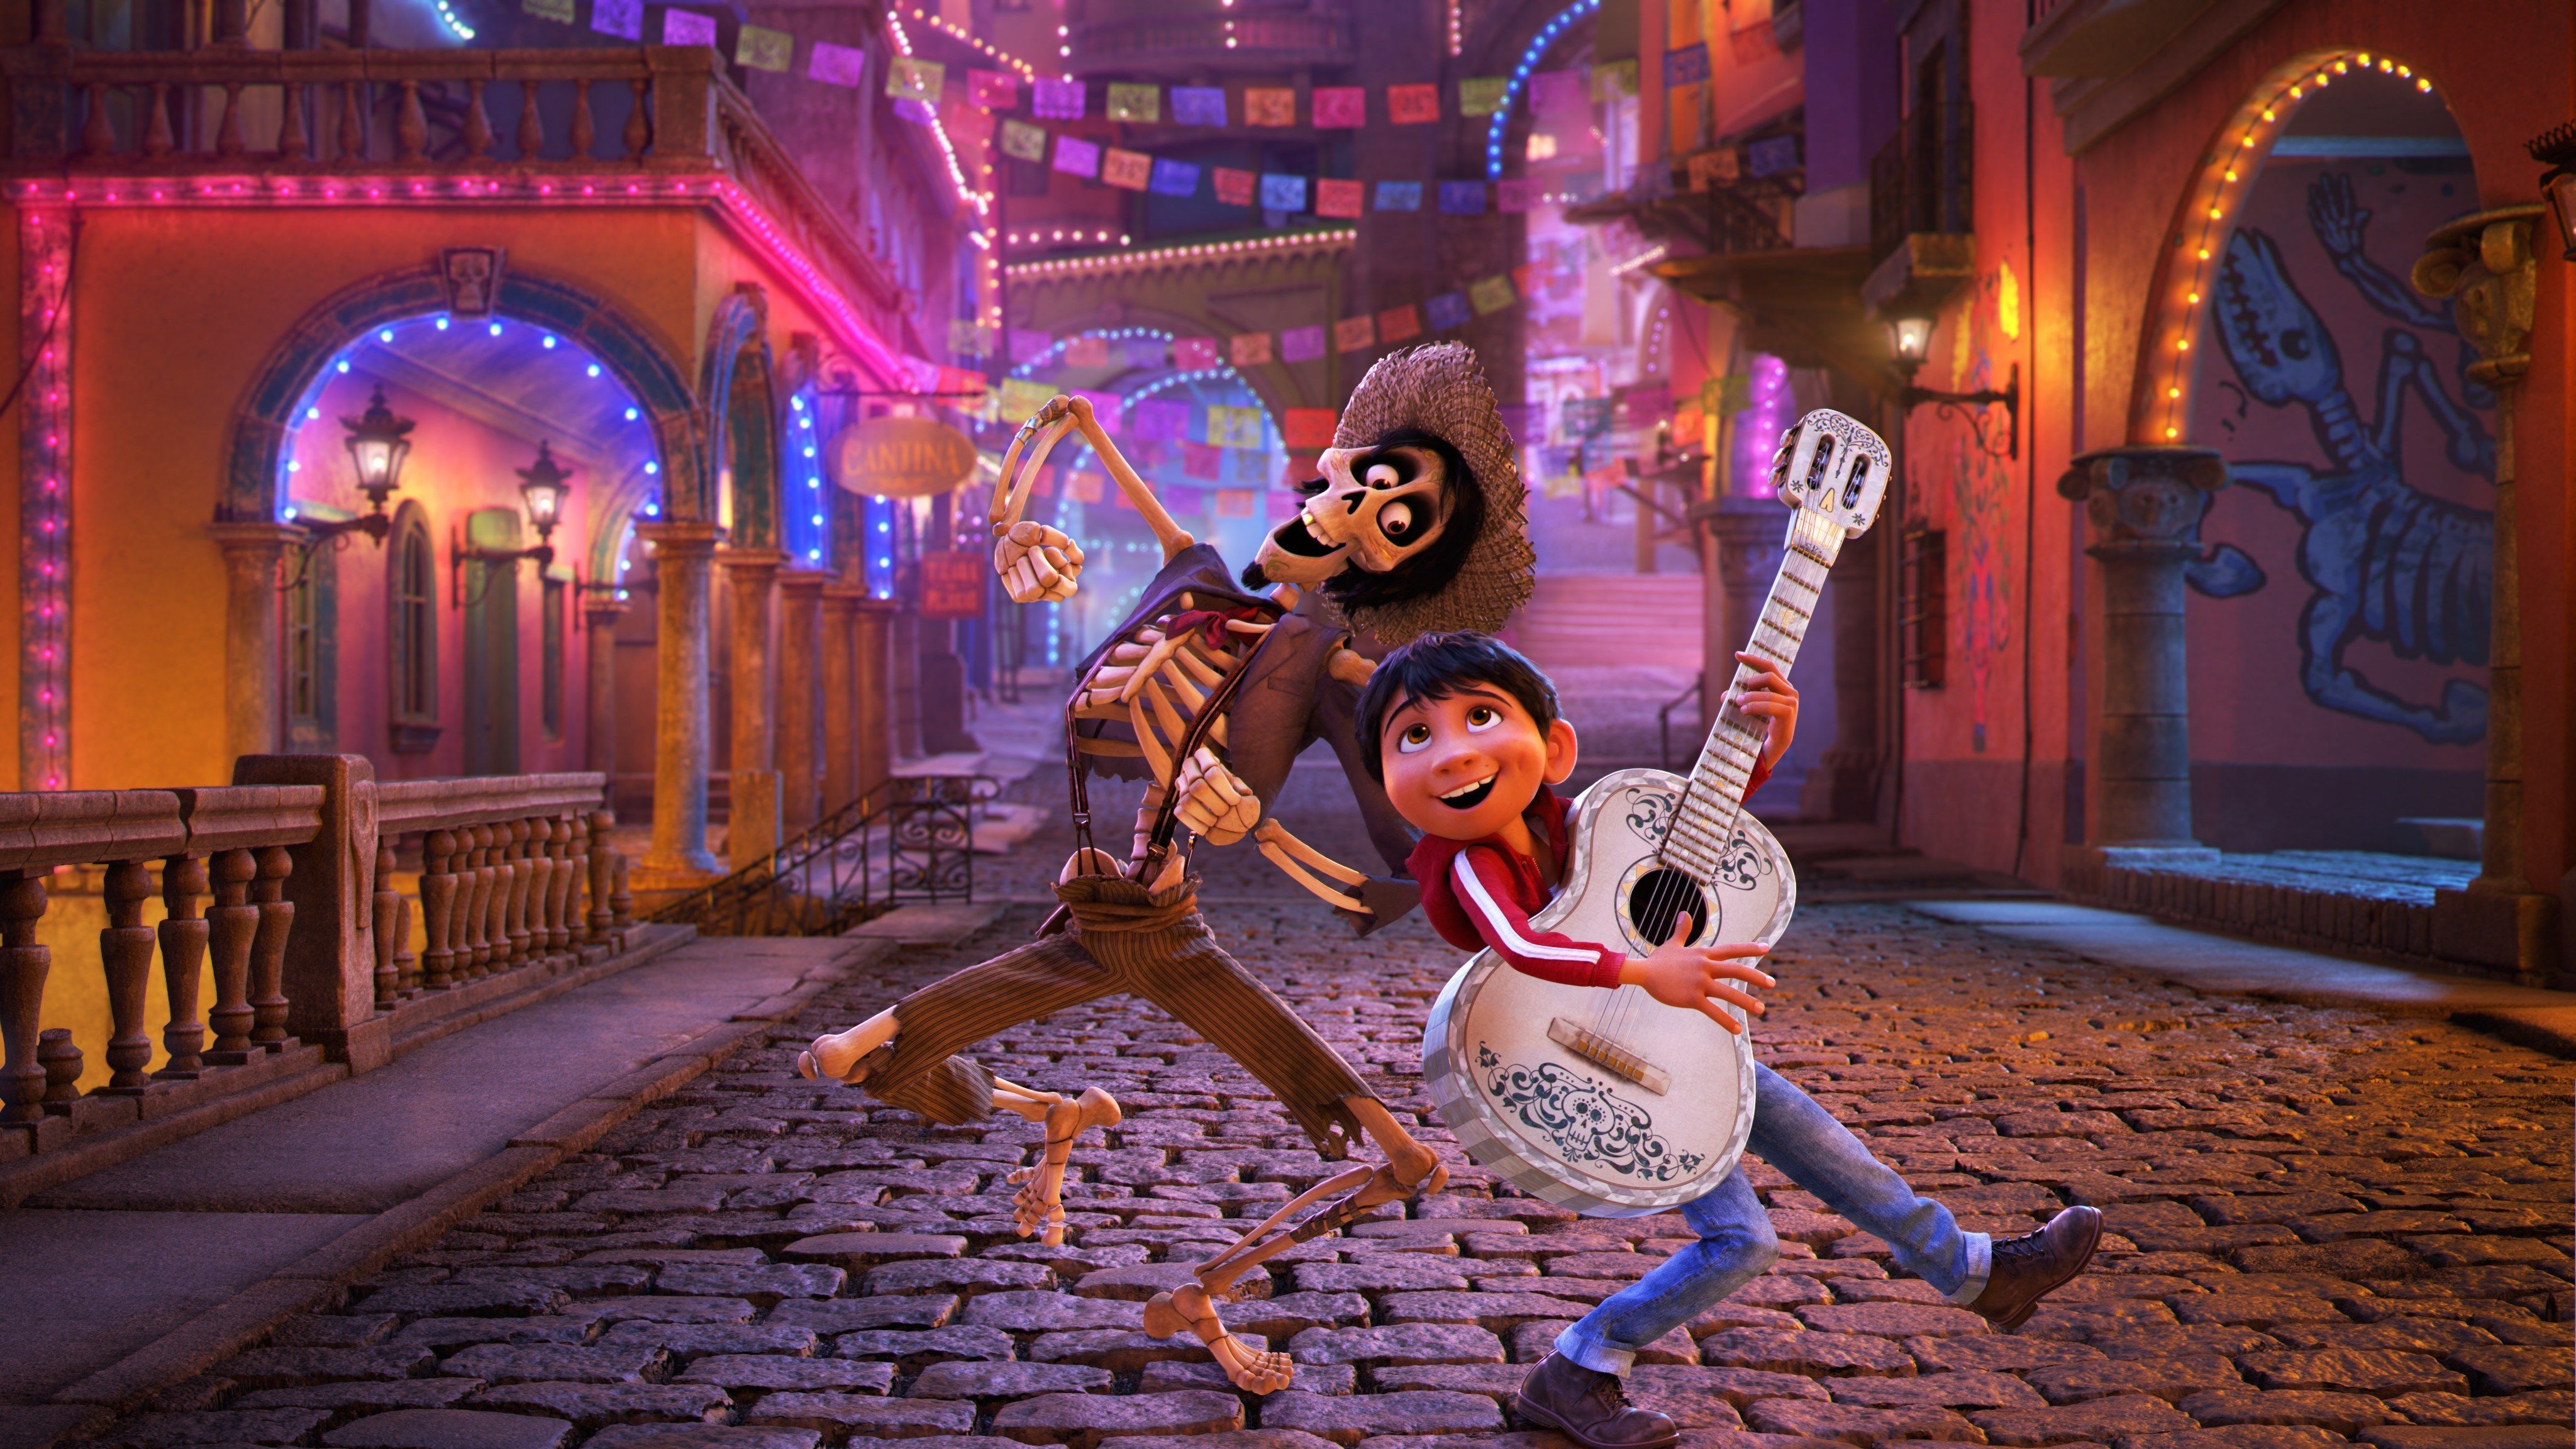 Coco Pixar Wallpaper Free Coco Pixar Background